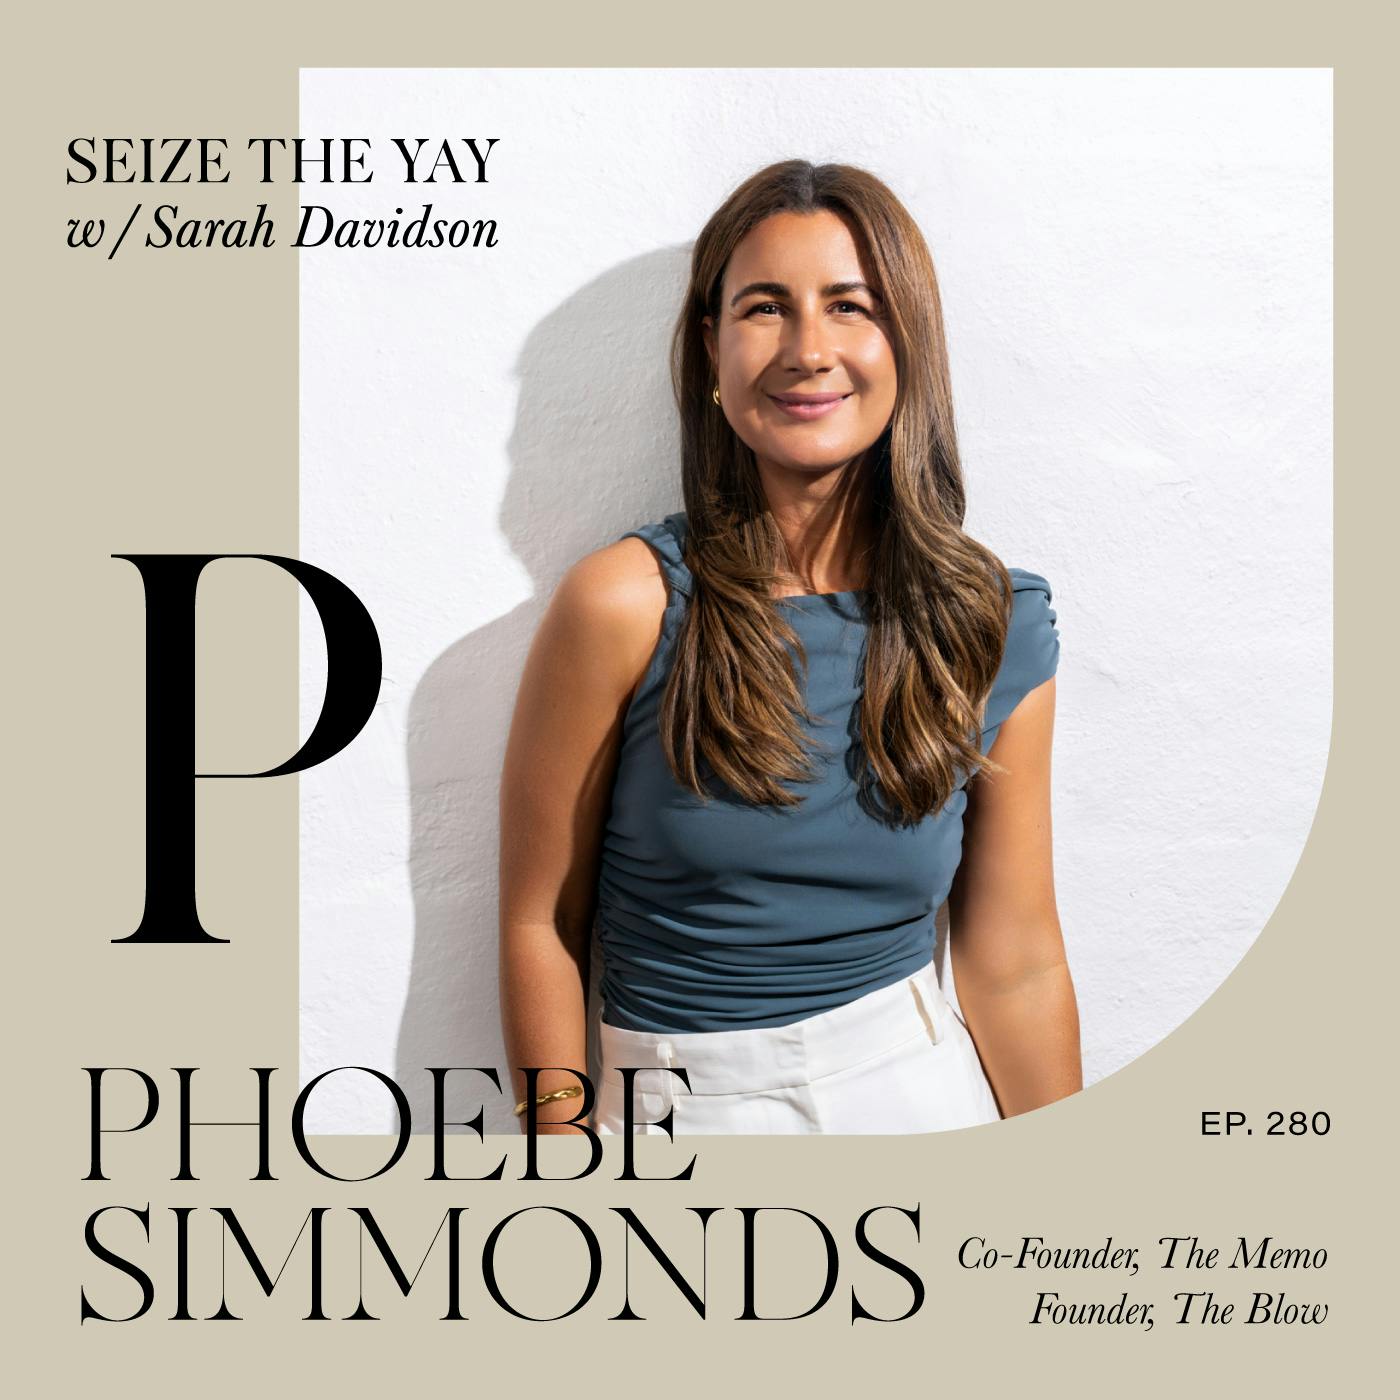 Phoebe Simmonds // She got The Memo!